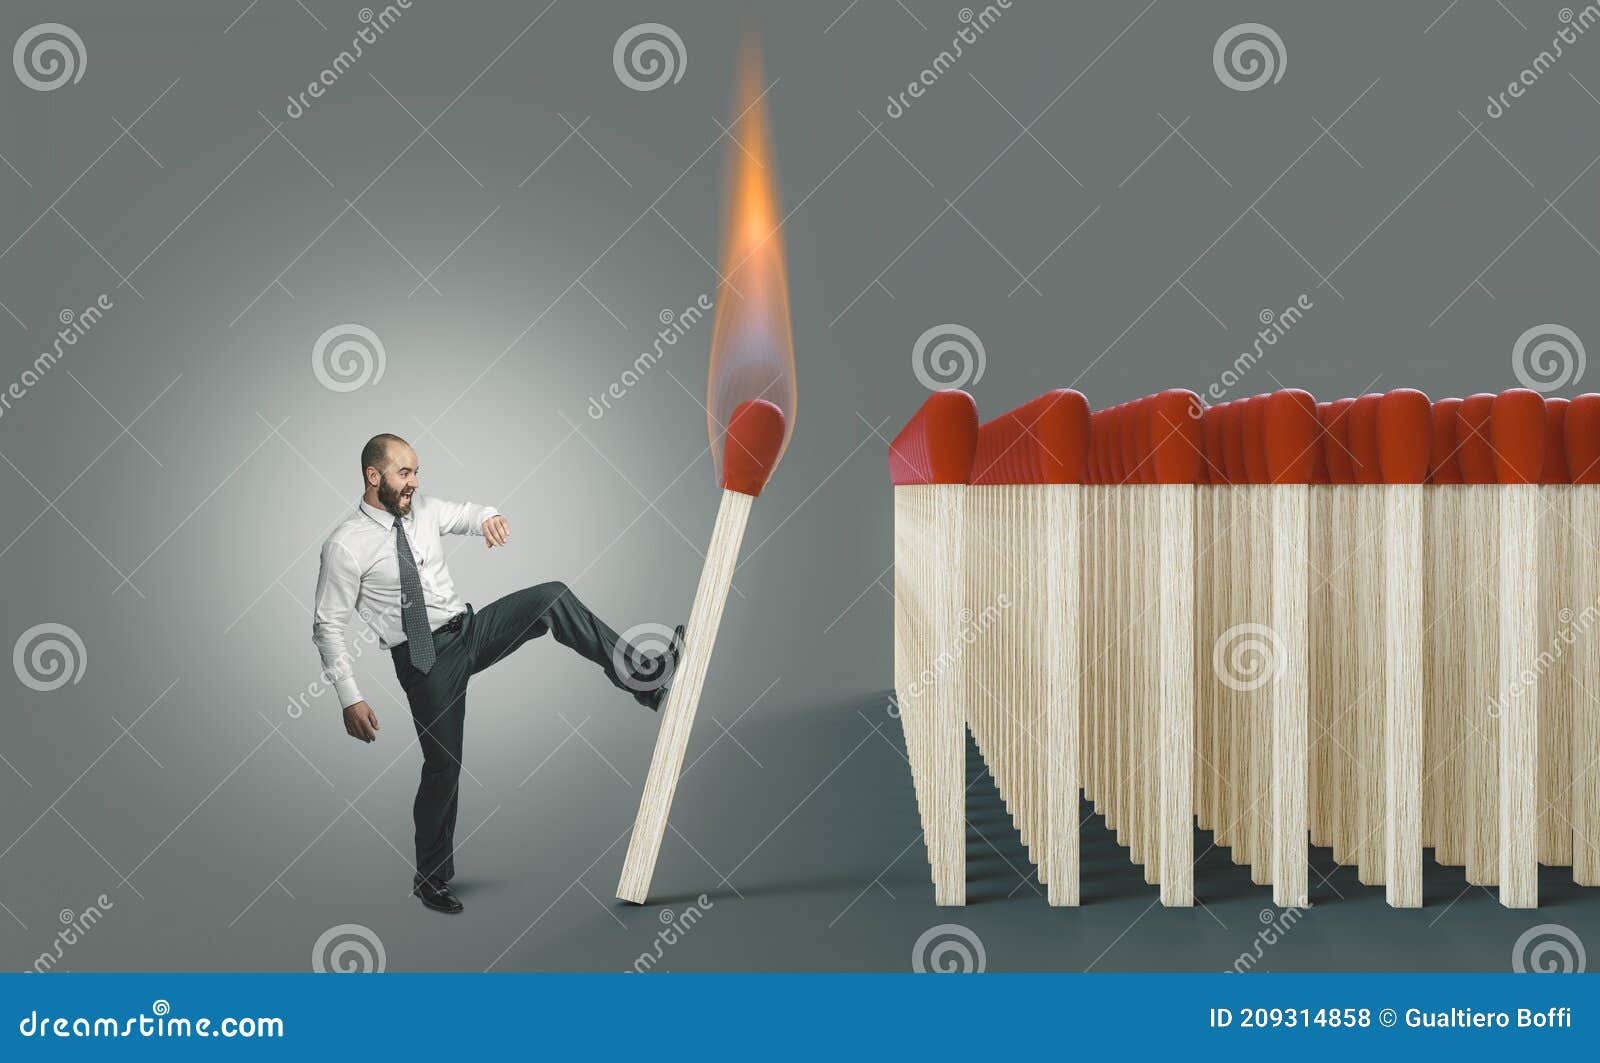 businessman kicking a lit match to ignite a chain reaction